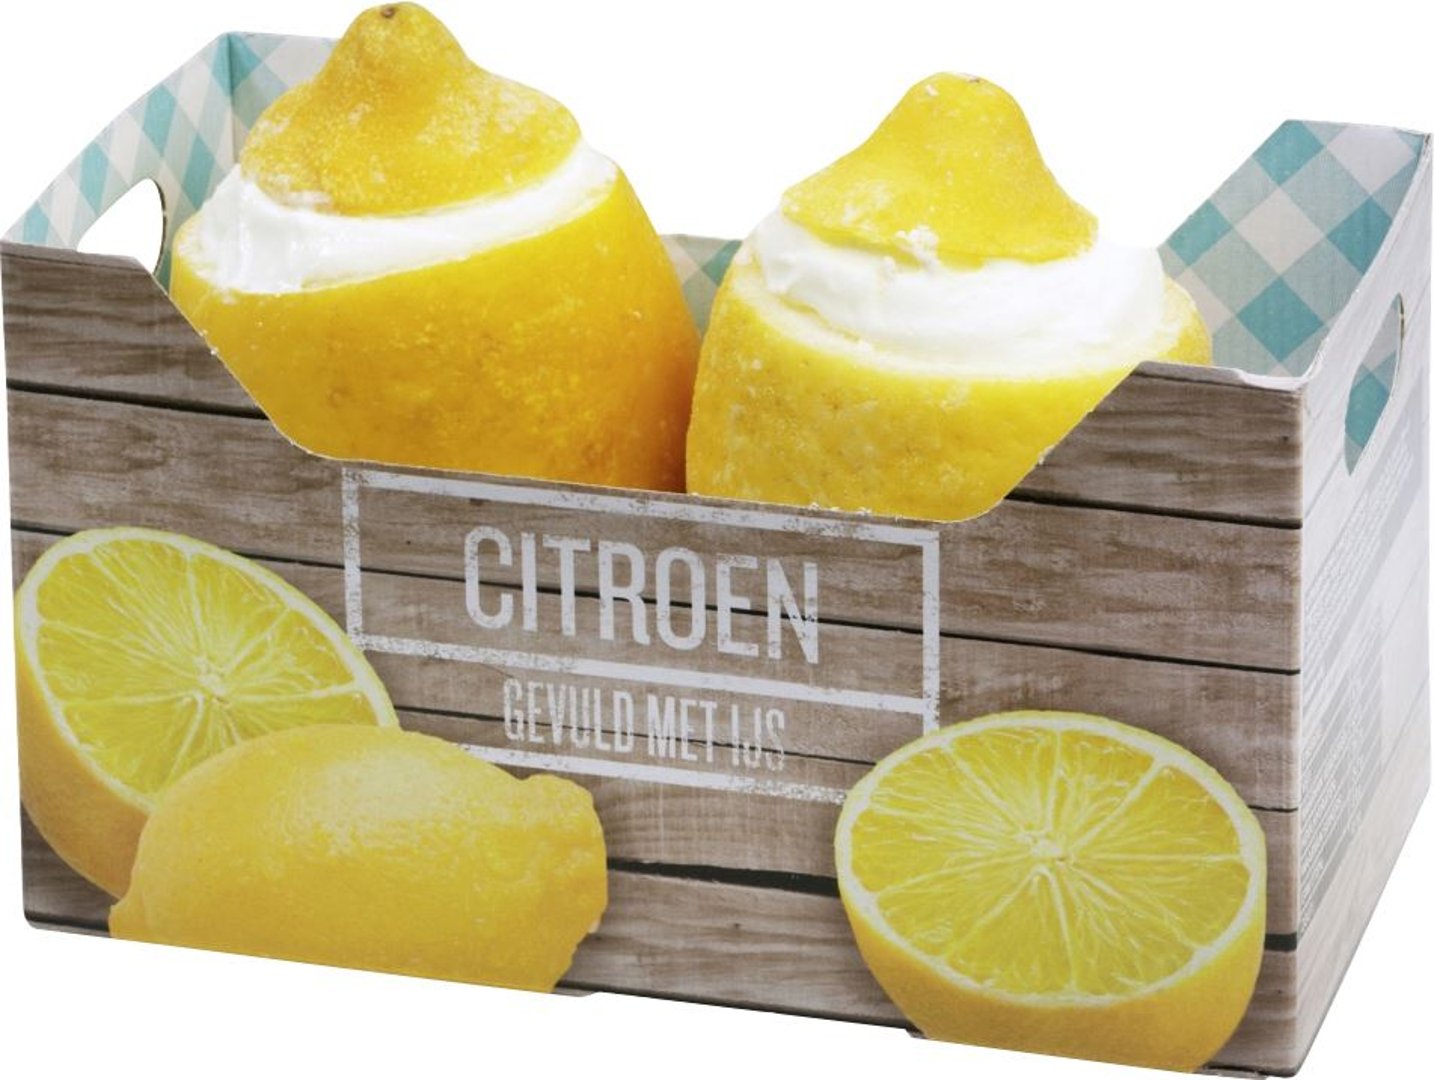 estiu Eisfrüchte Zitrone tiefgefroren 2 Stück à 116 ml - 232 ml Schale